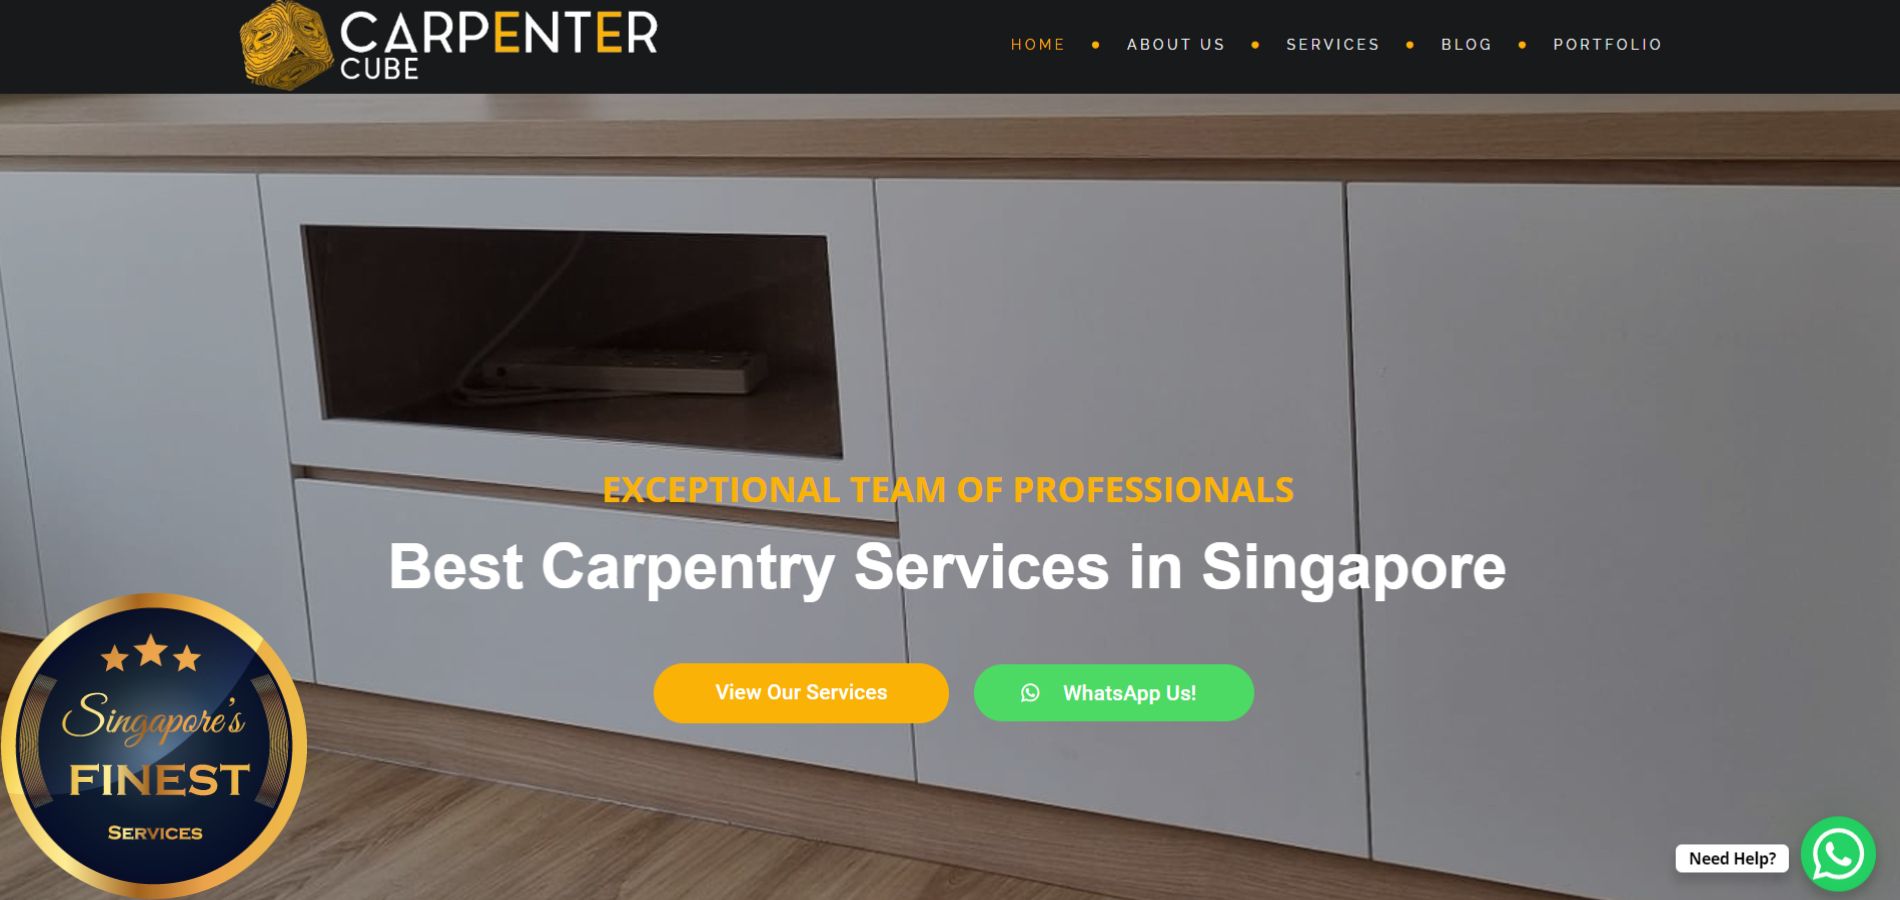 Carpenter Cube - The Finest Carpenters in Singapore